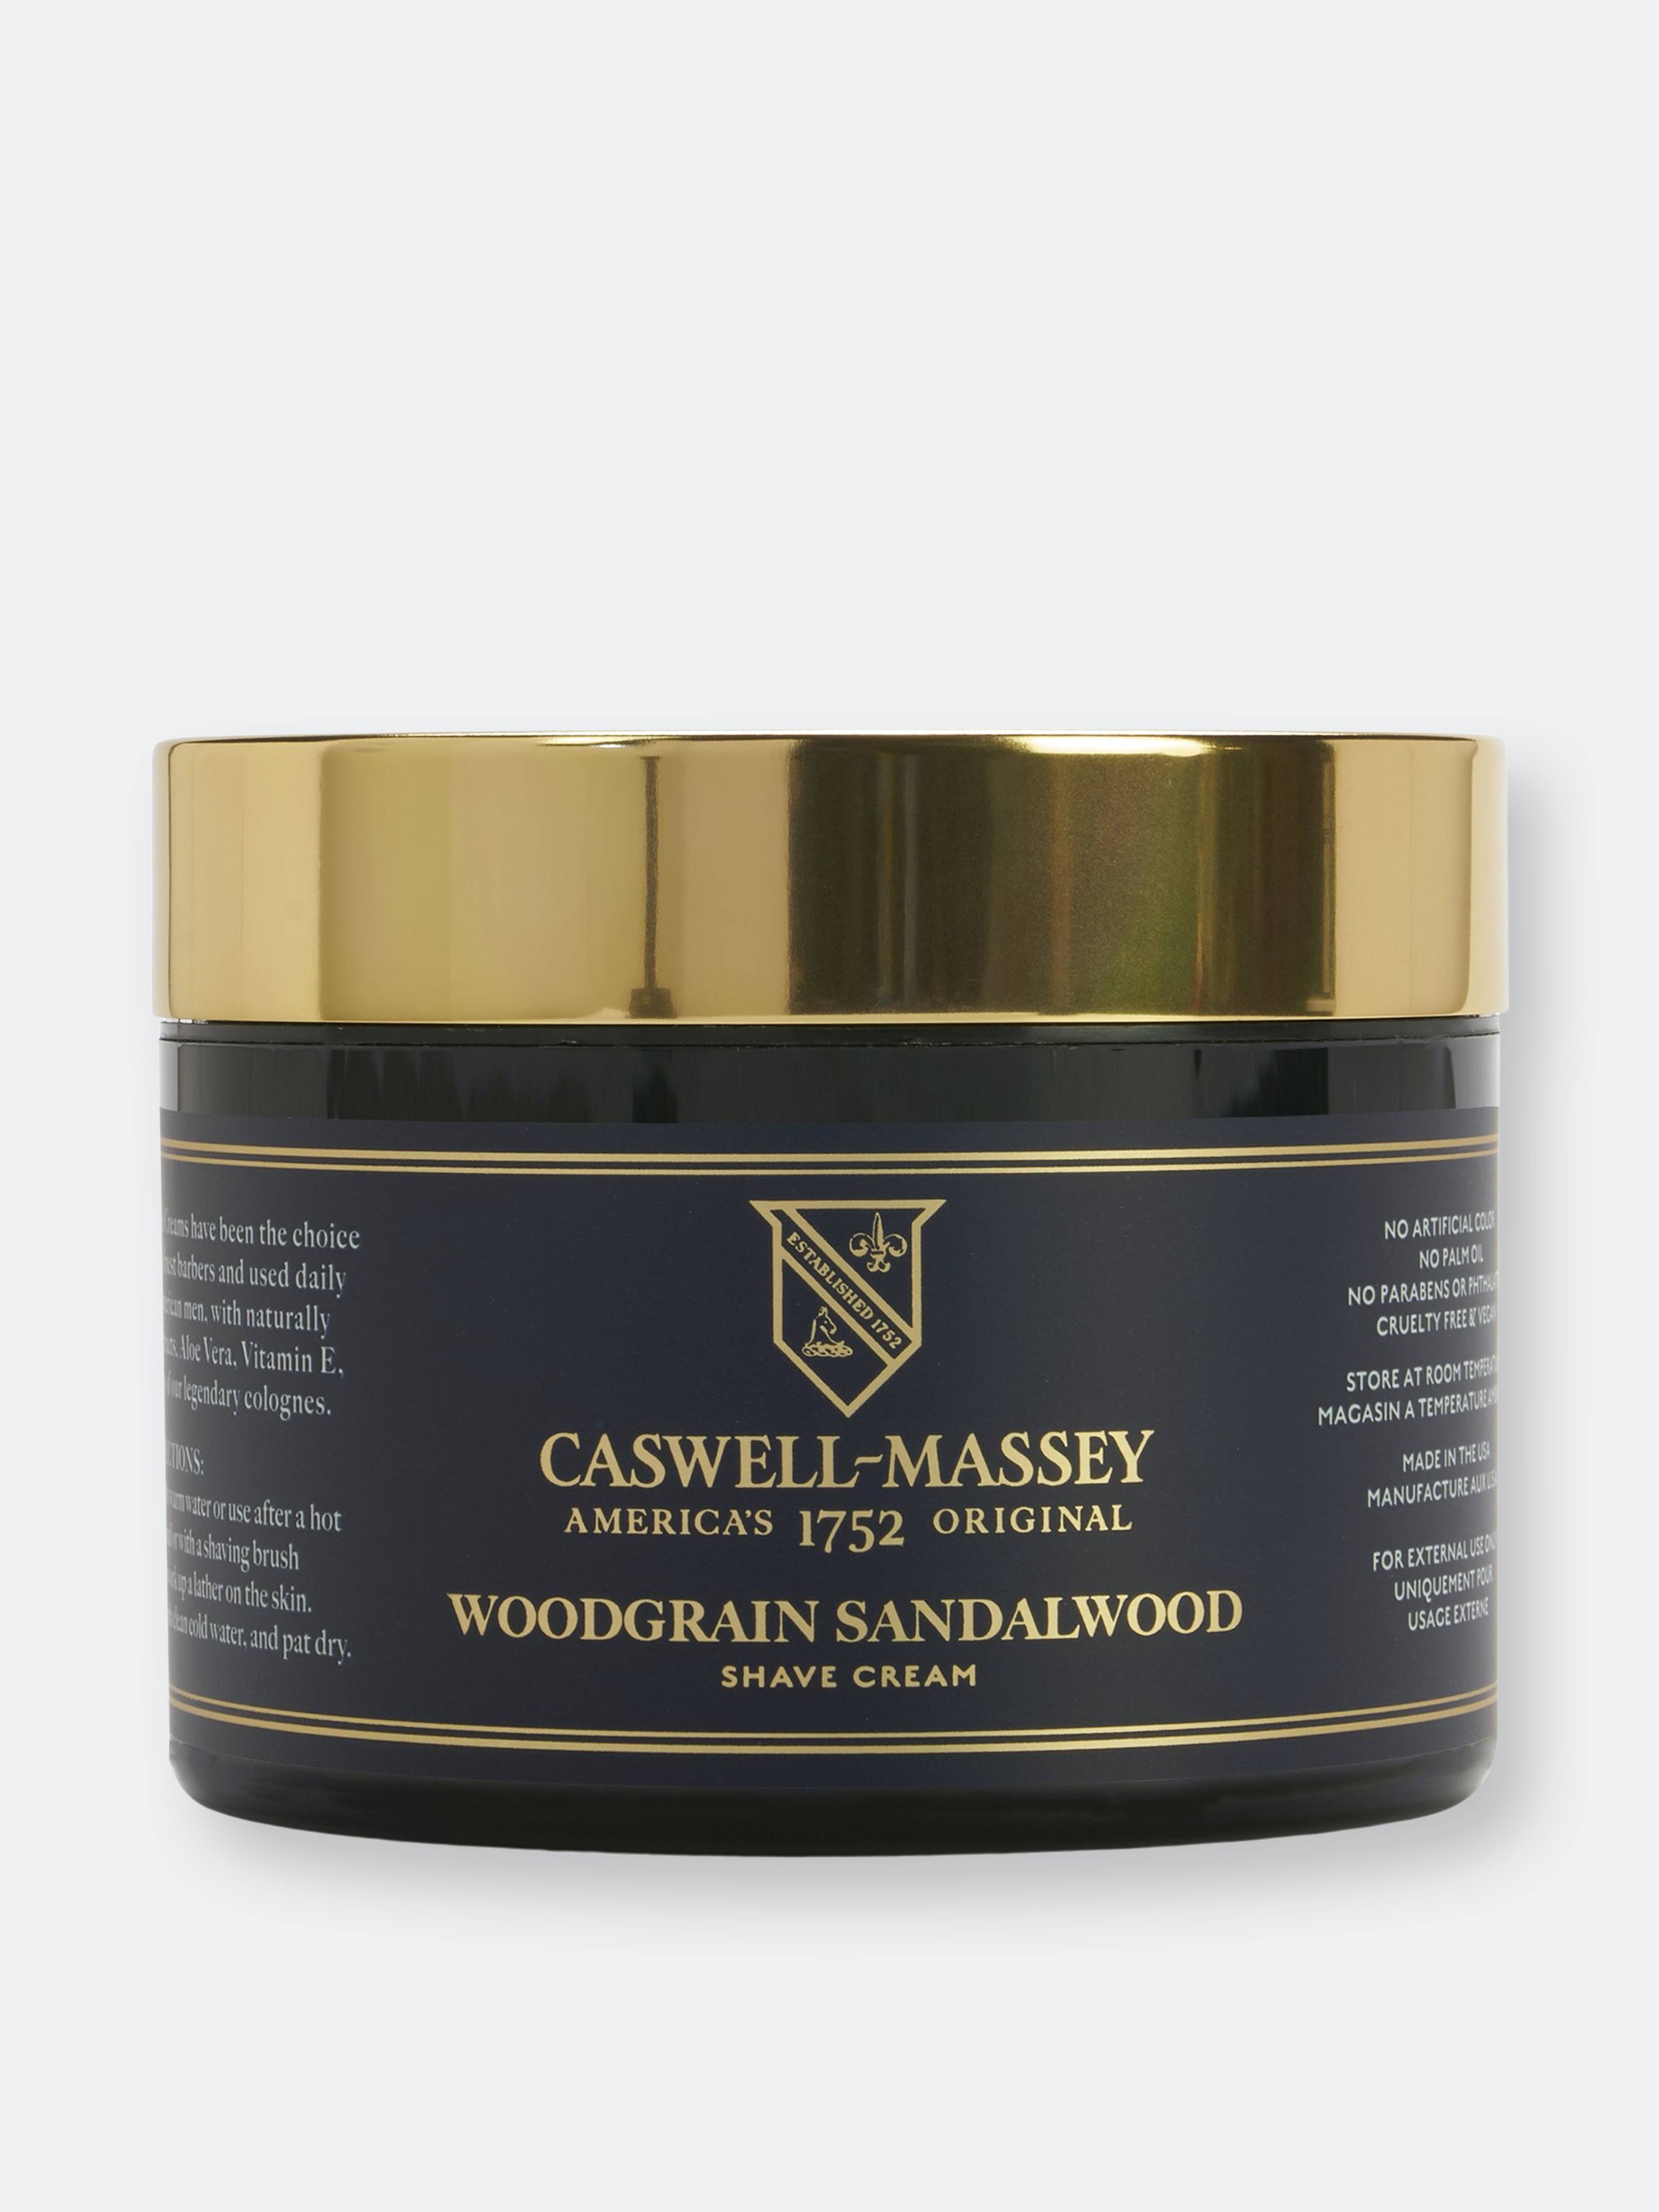 Caswell-Massey Shave Cream - Sandalwood, 8 Ounce